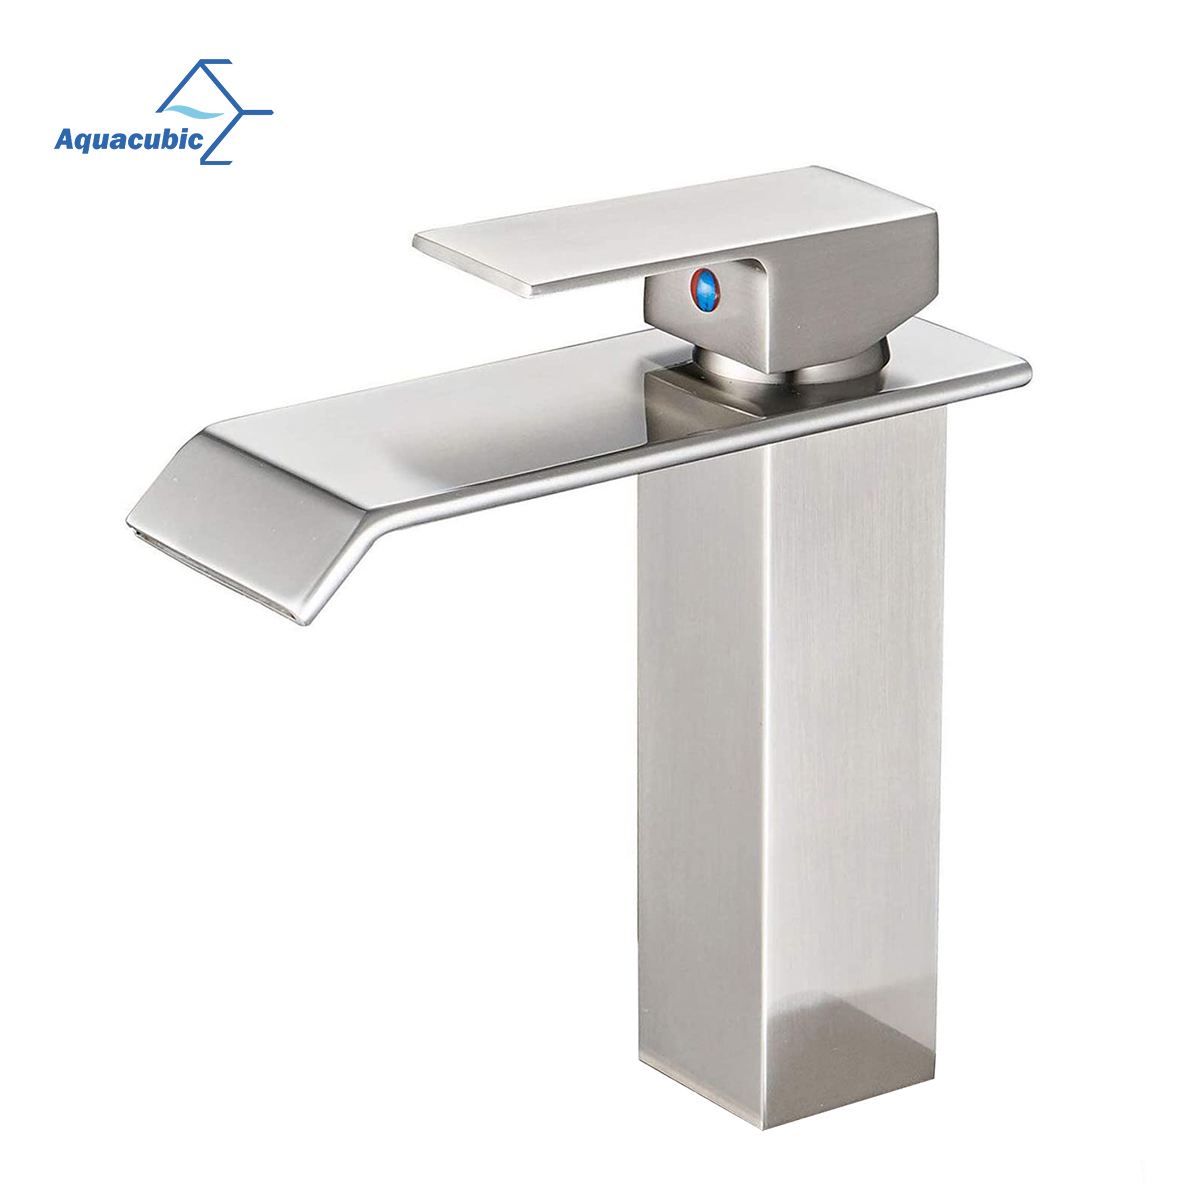 Aquacubic cUPC Single Handle Brushed Nickel Wash Basin Tap Lavatory Washroom Bathroom Sink Faucet